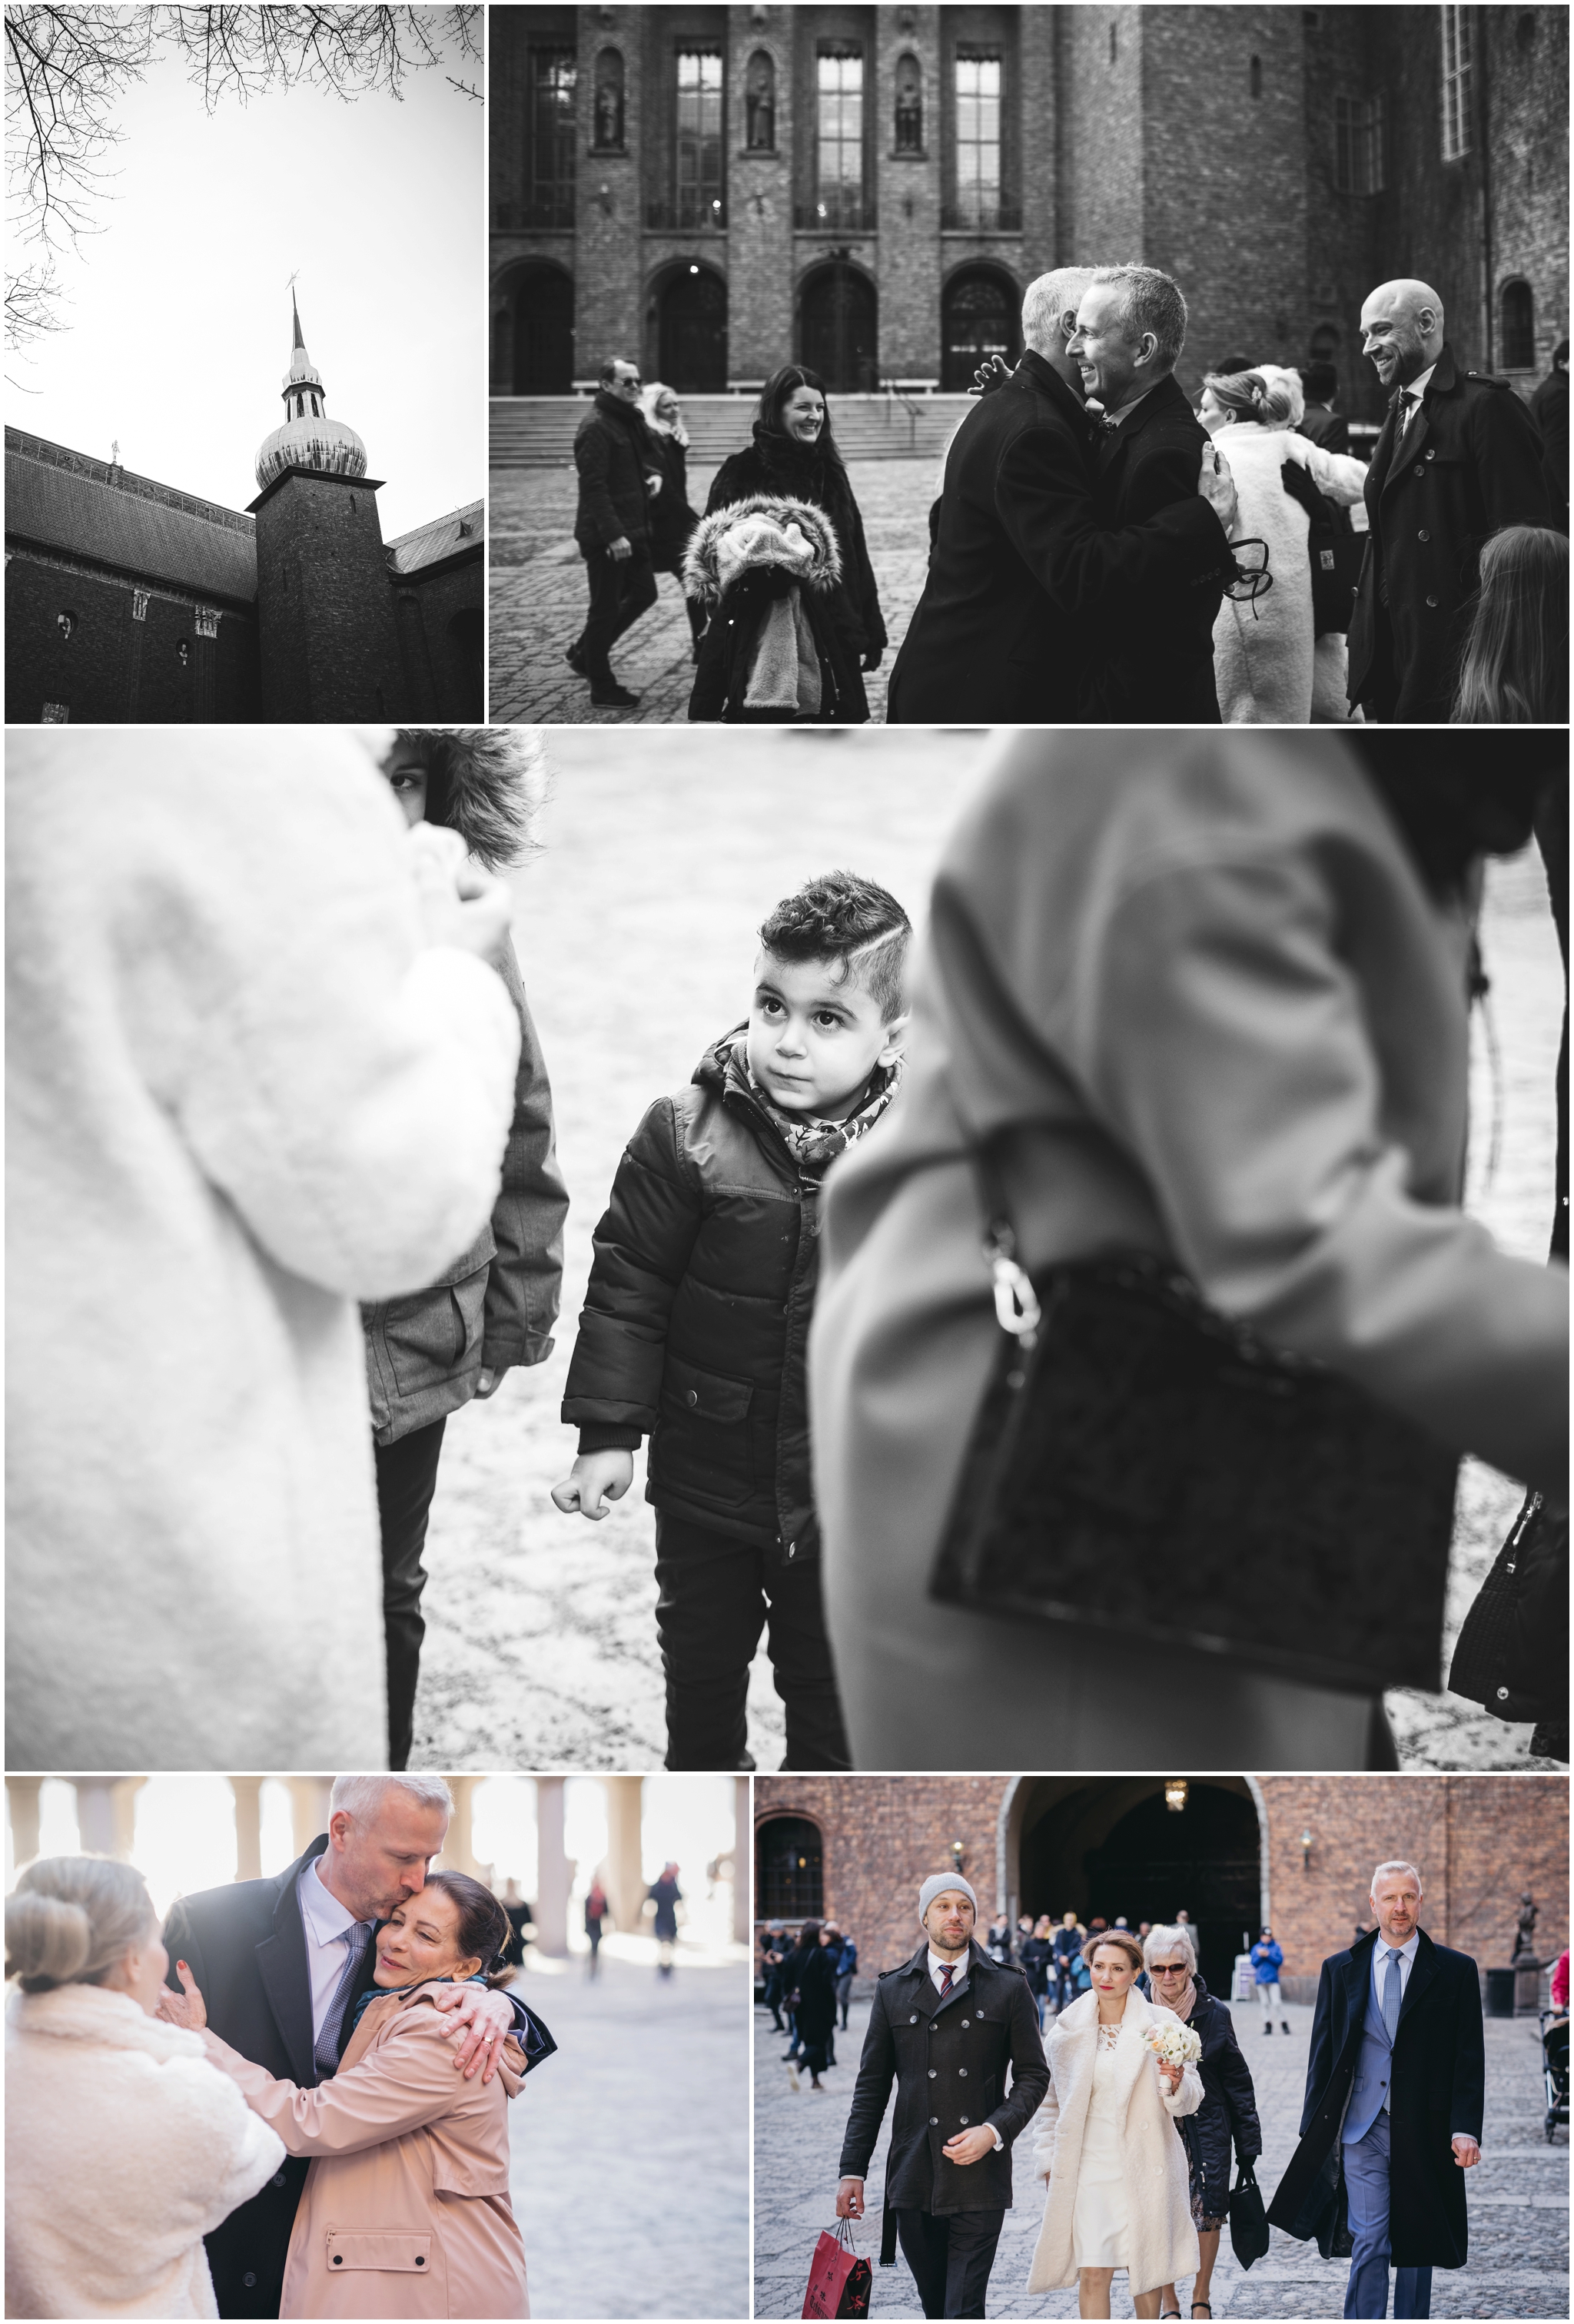 bröllopsfotograf stockholm stadshuset, bröllop i stadshuset, bröllopsbilder, vigsel i stadshuset, borgerlig vigsel, linda rehlin, cecilia pihl, bröllop stadshuset pris